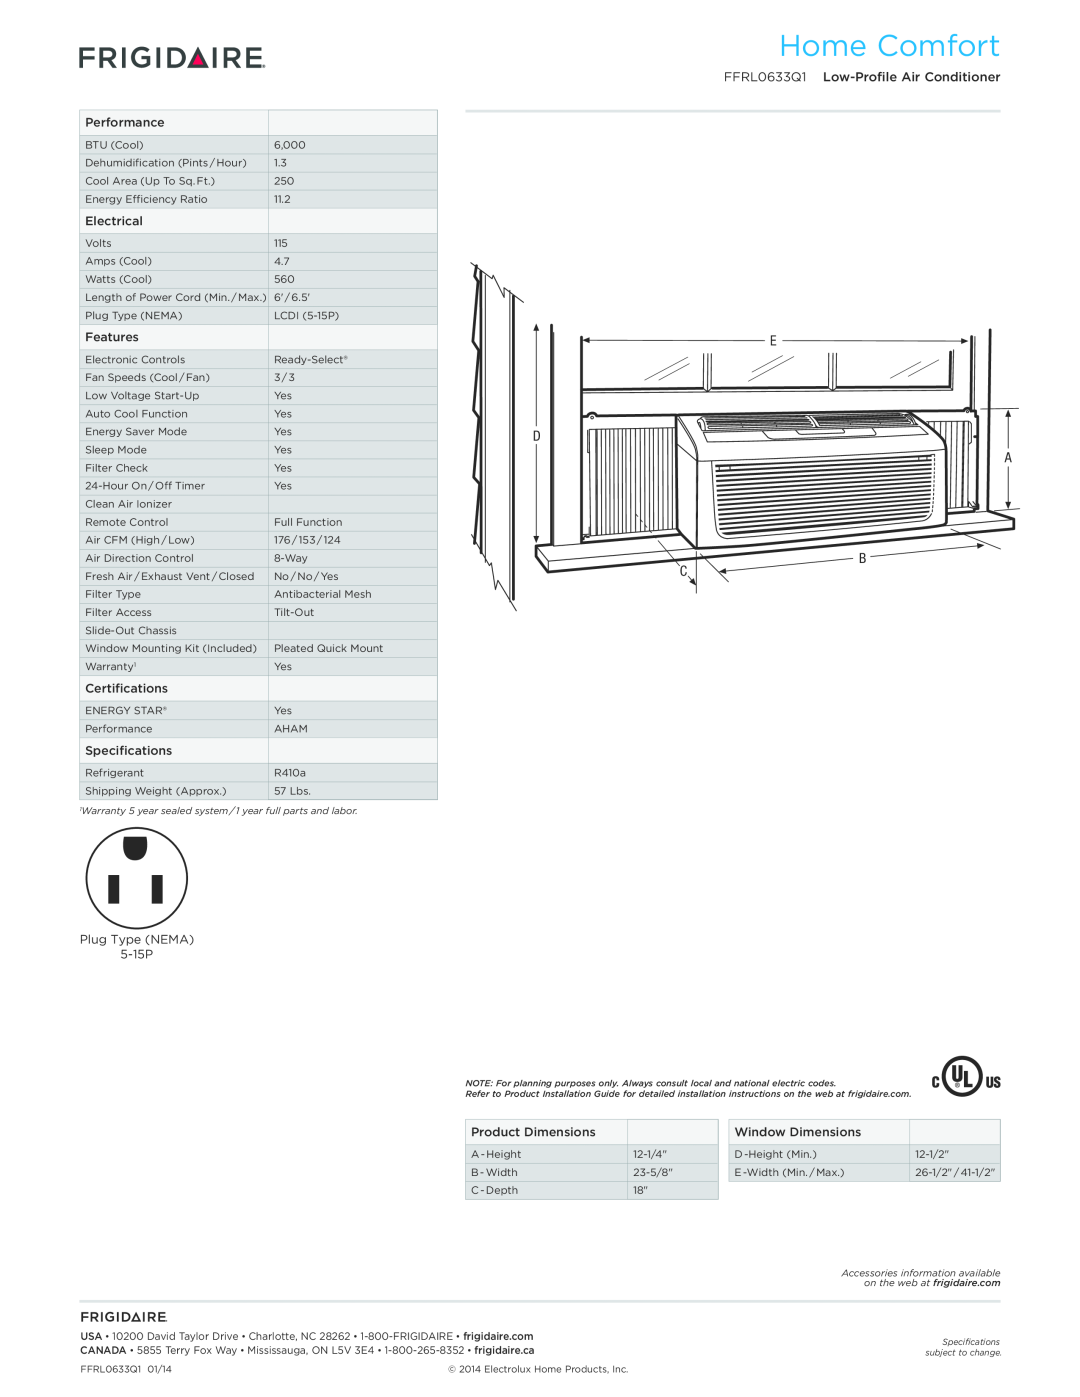 Frigidaire dimensions Home Comfort, FFRL0633Q1 Low-Profile Air Conditioner, Plug Type NEMA 5-15P 